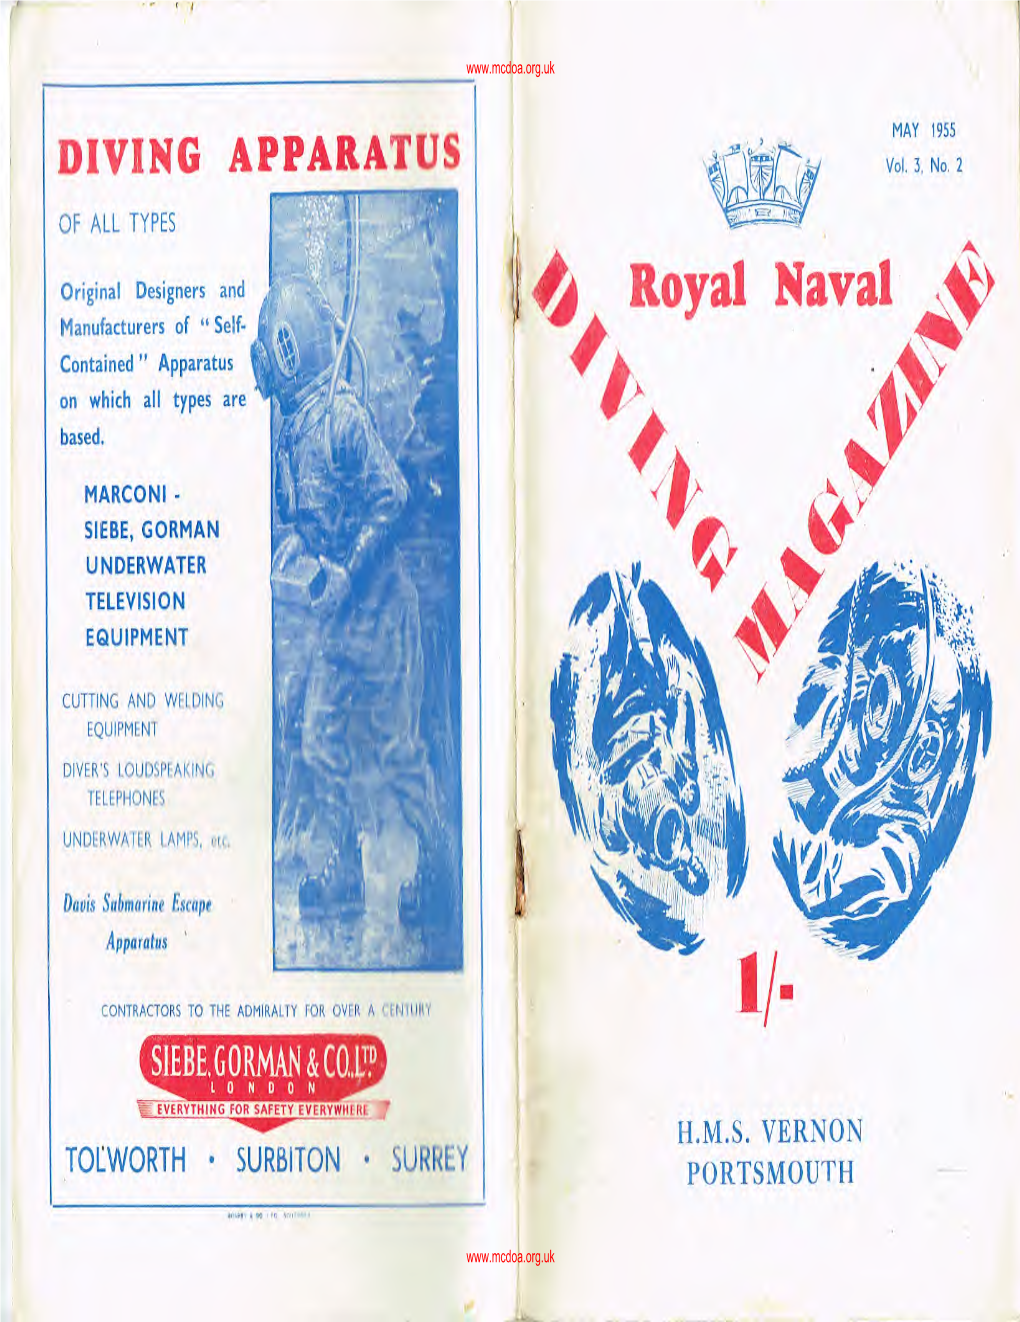 4 Royal Naval Naval Royal ,4